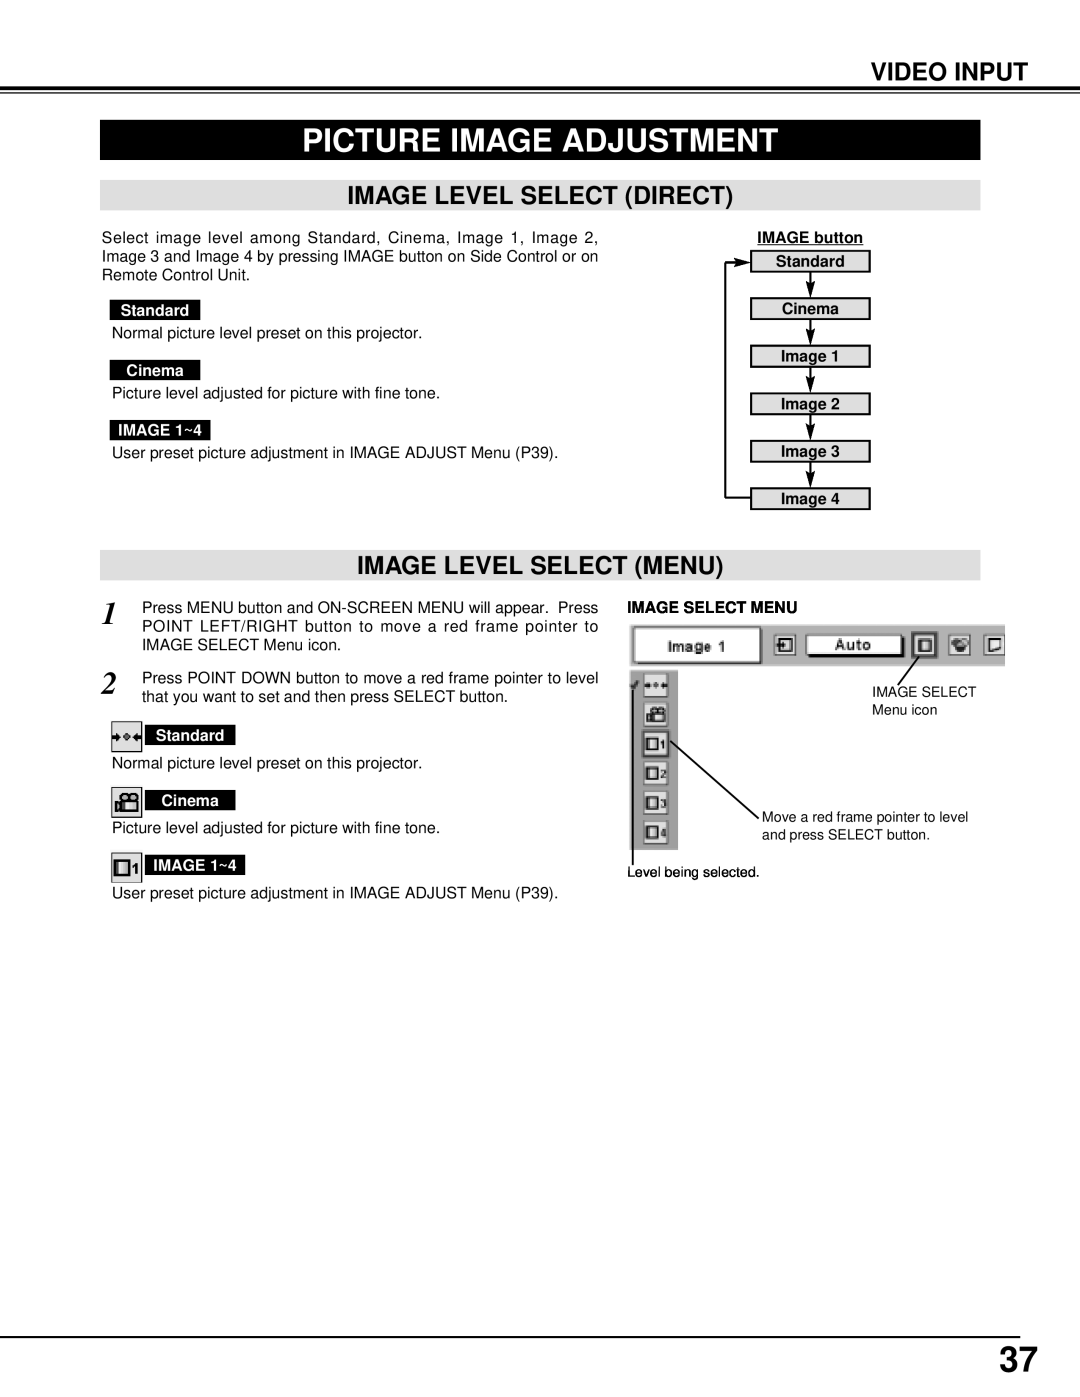 Eiki LC-UXT1 instruction manual Picture Image Adjustment, Video Input, Image Level Select Direct, Image Level Select Menu 